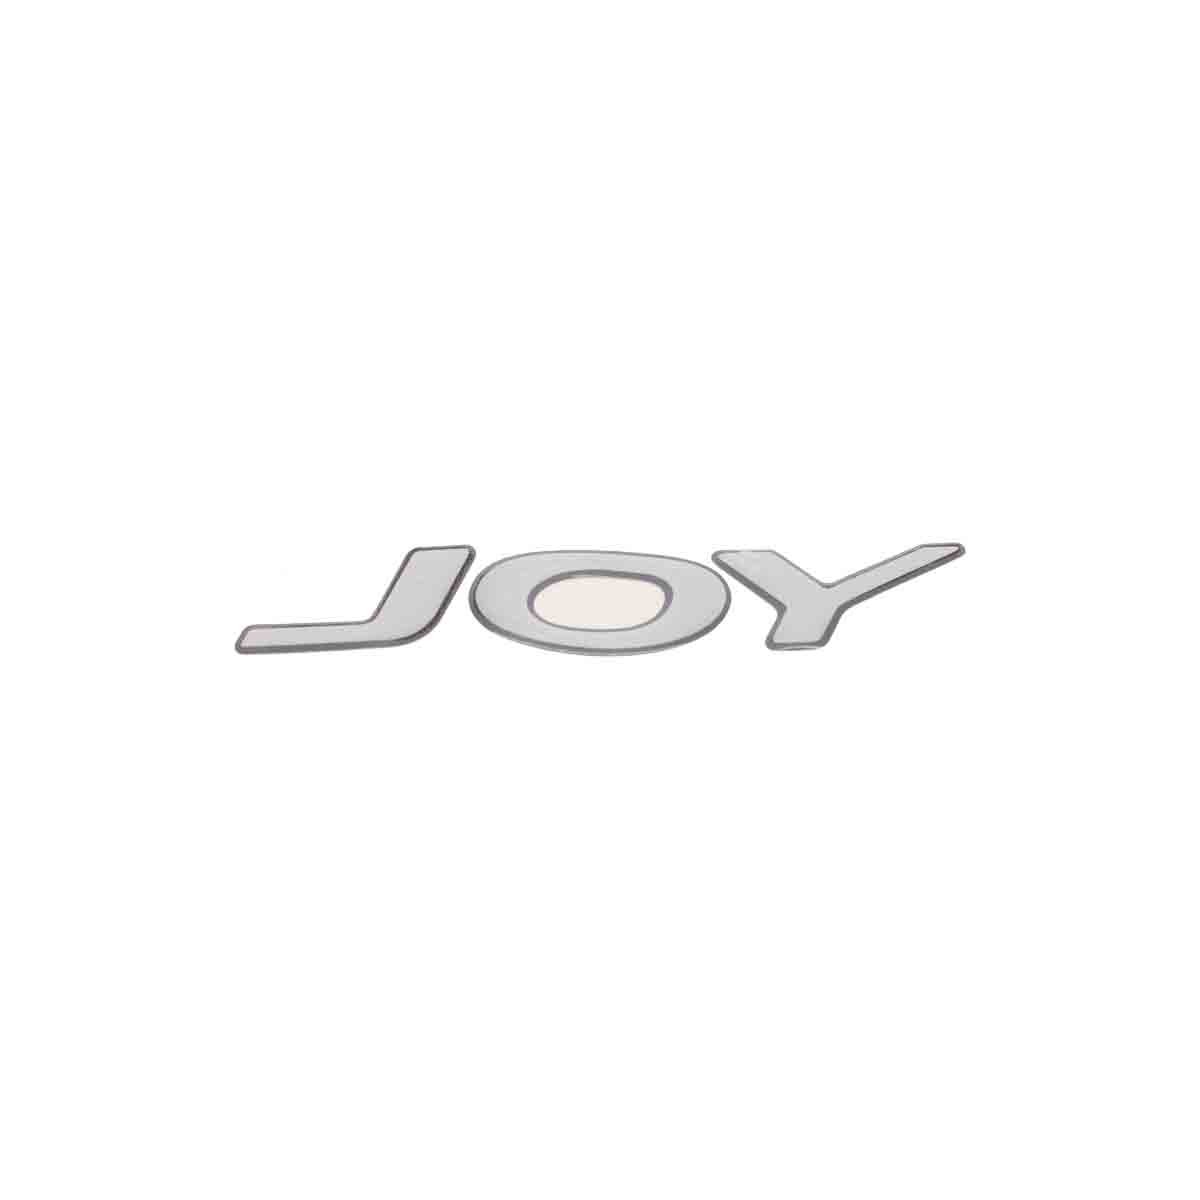 Emblema Joy (Corsa Novo)